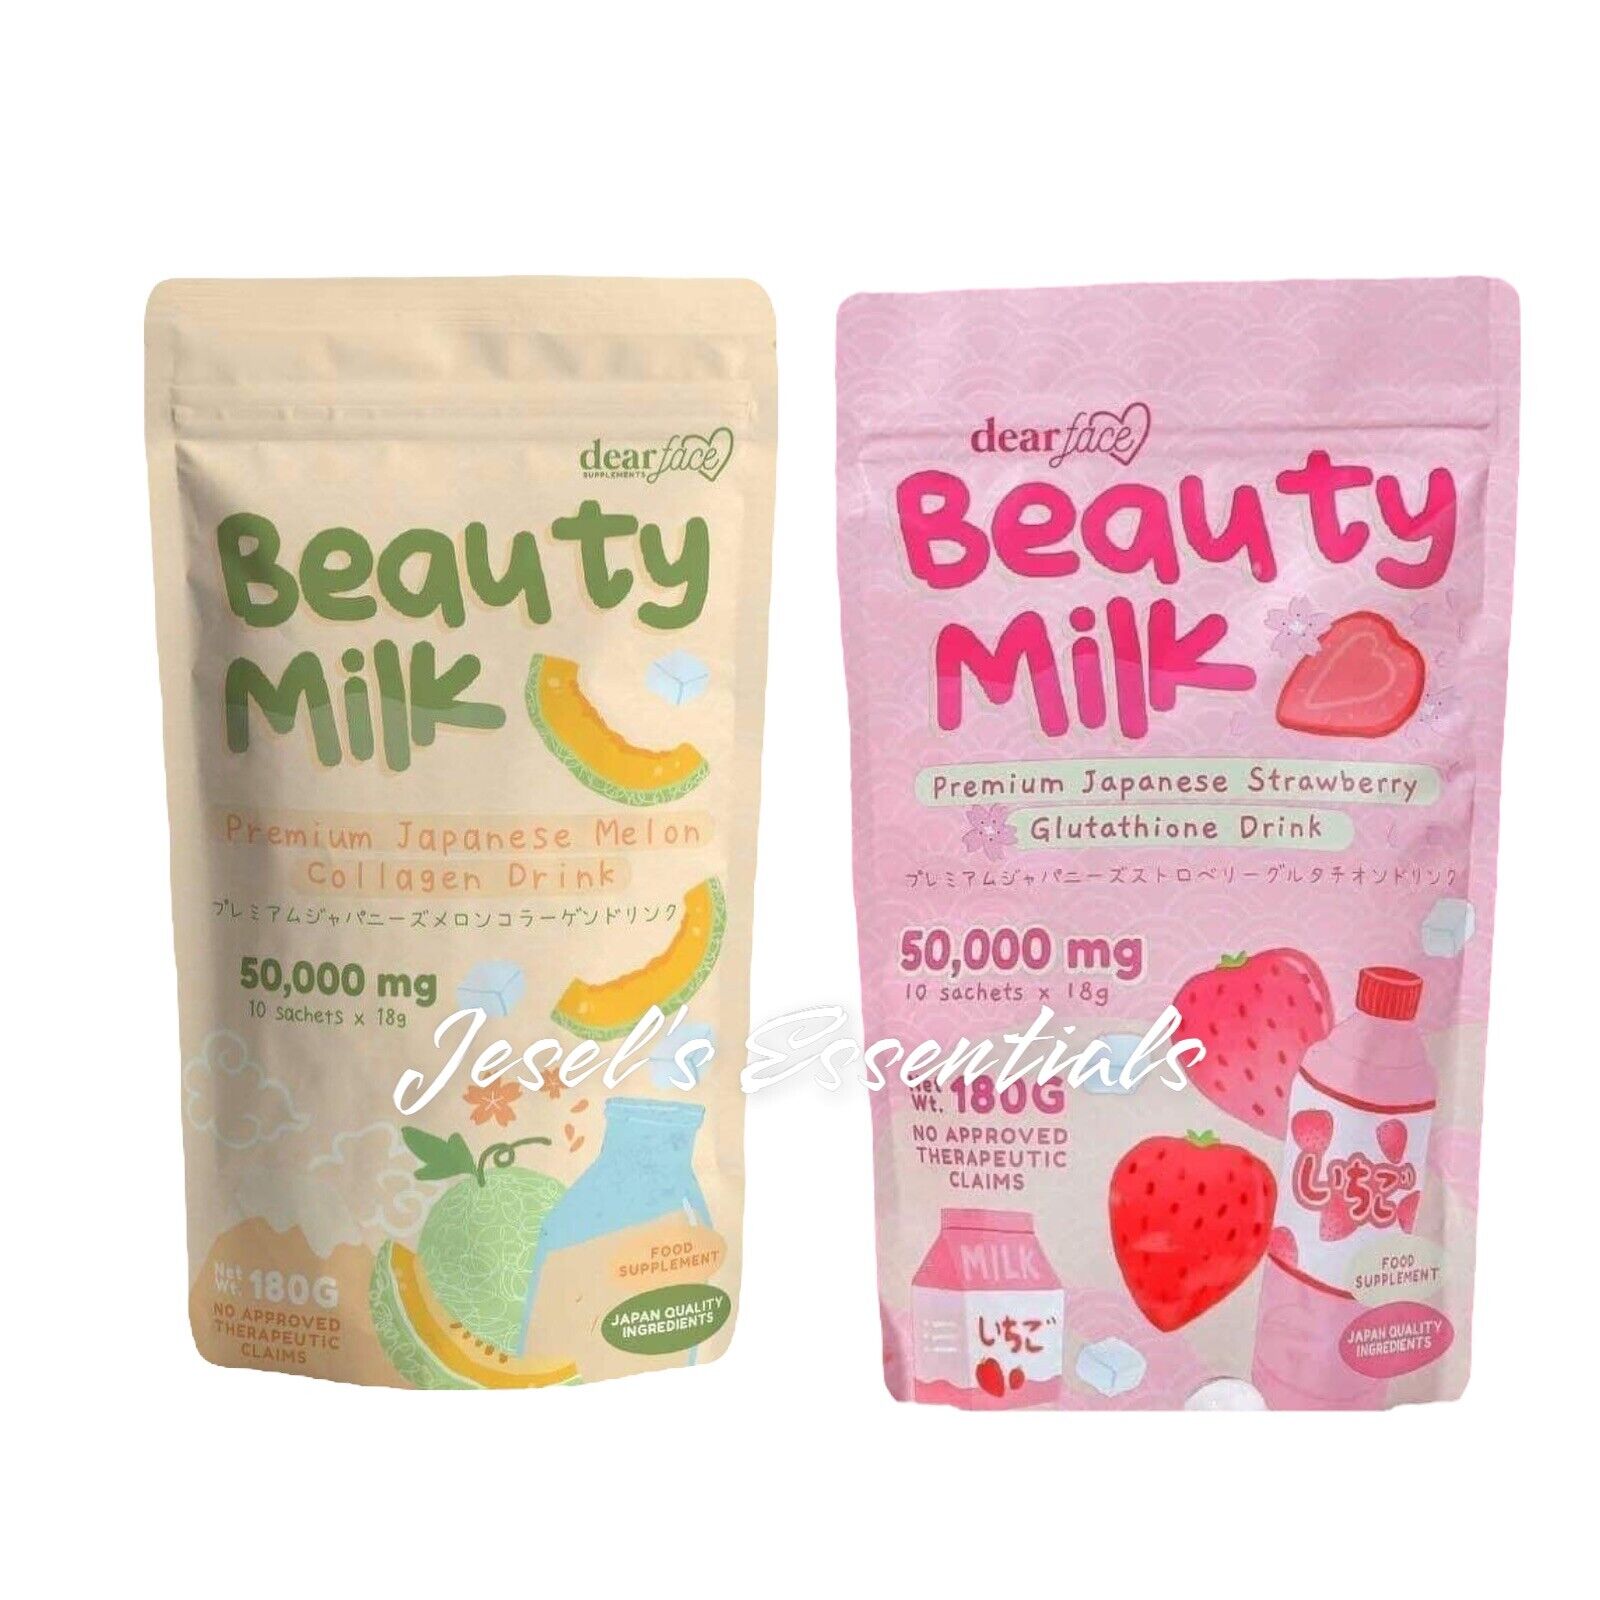  Dear Face Beauty Milk Japanese Collagen STRAWBERRY & MELON Drink (2 Packs)